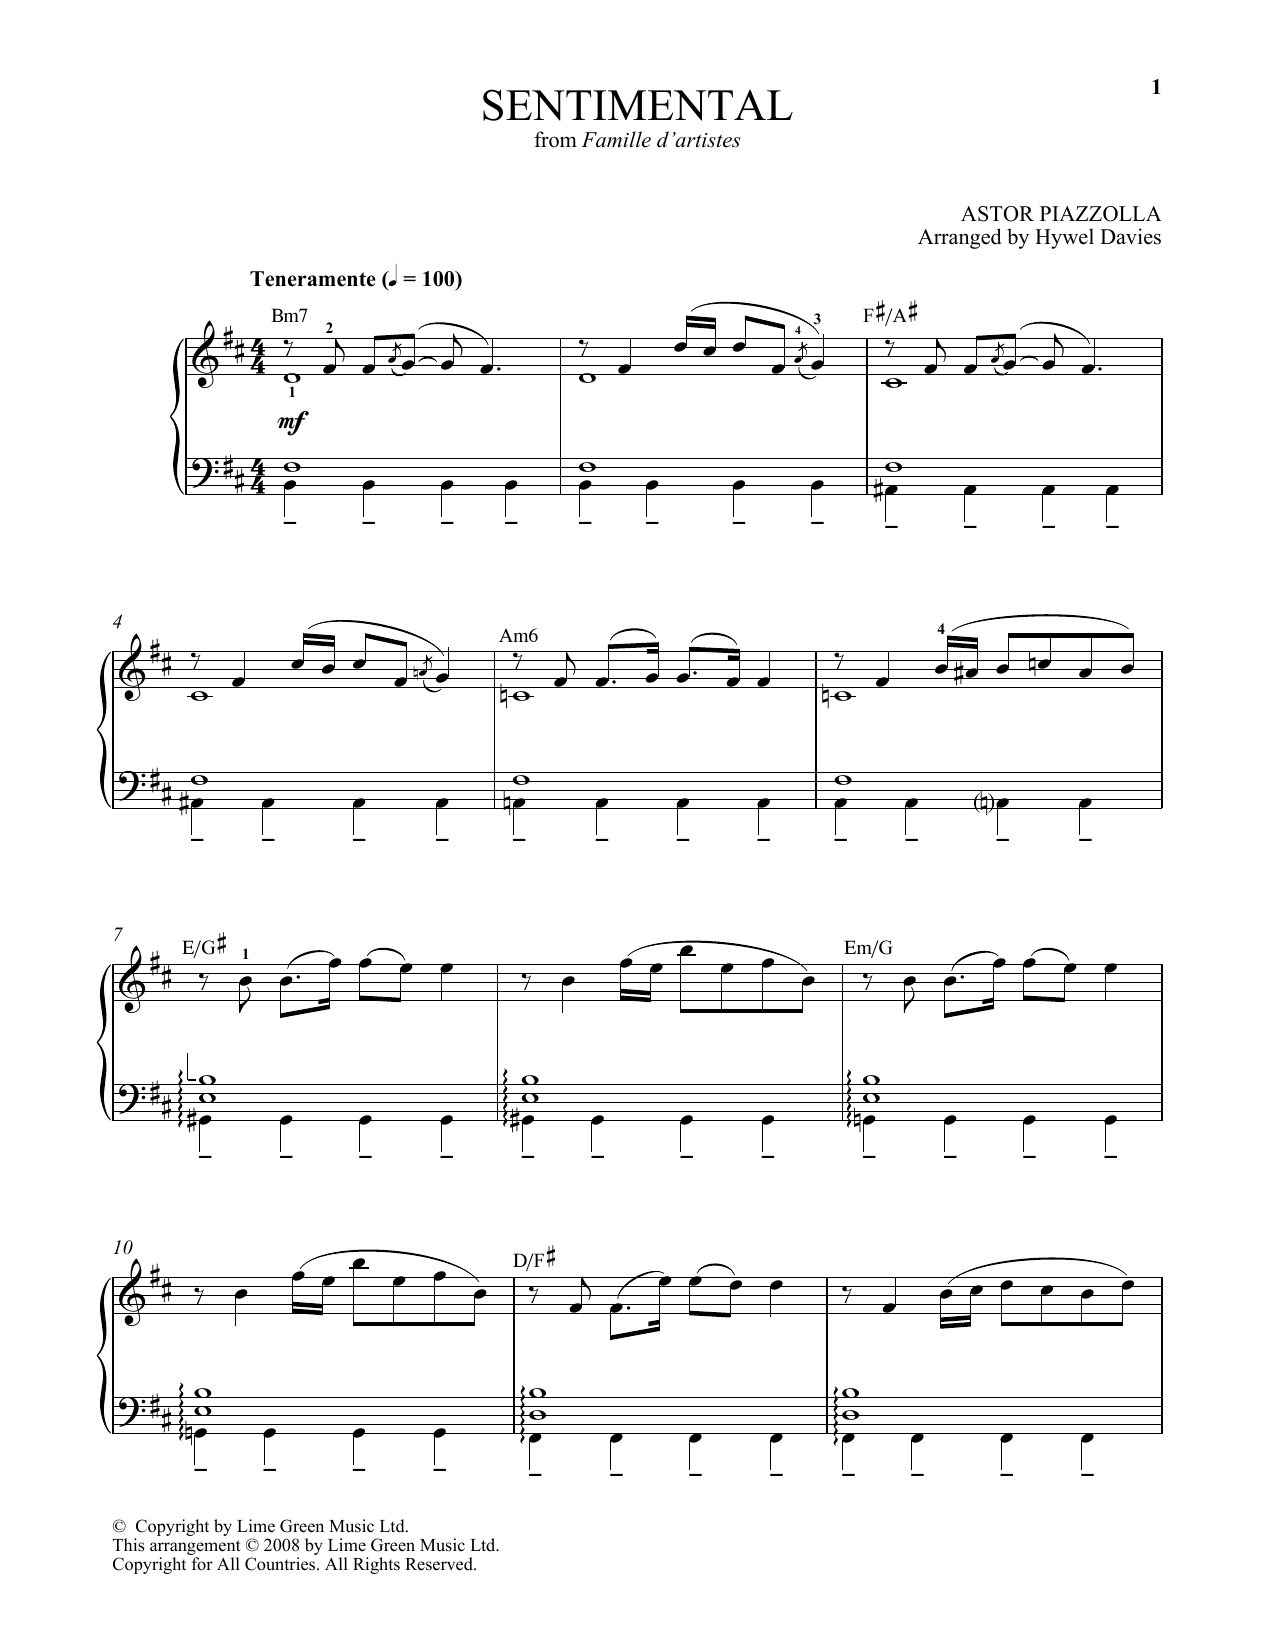 Download Astor Piazzolla Sentimental Sheet Music